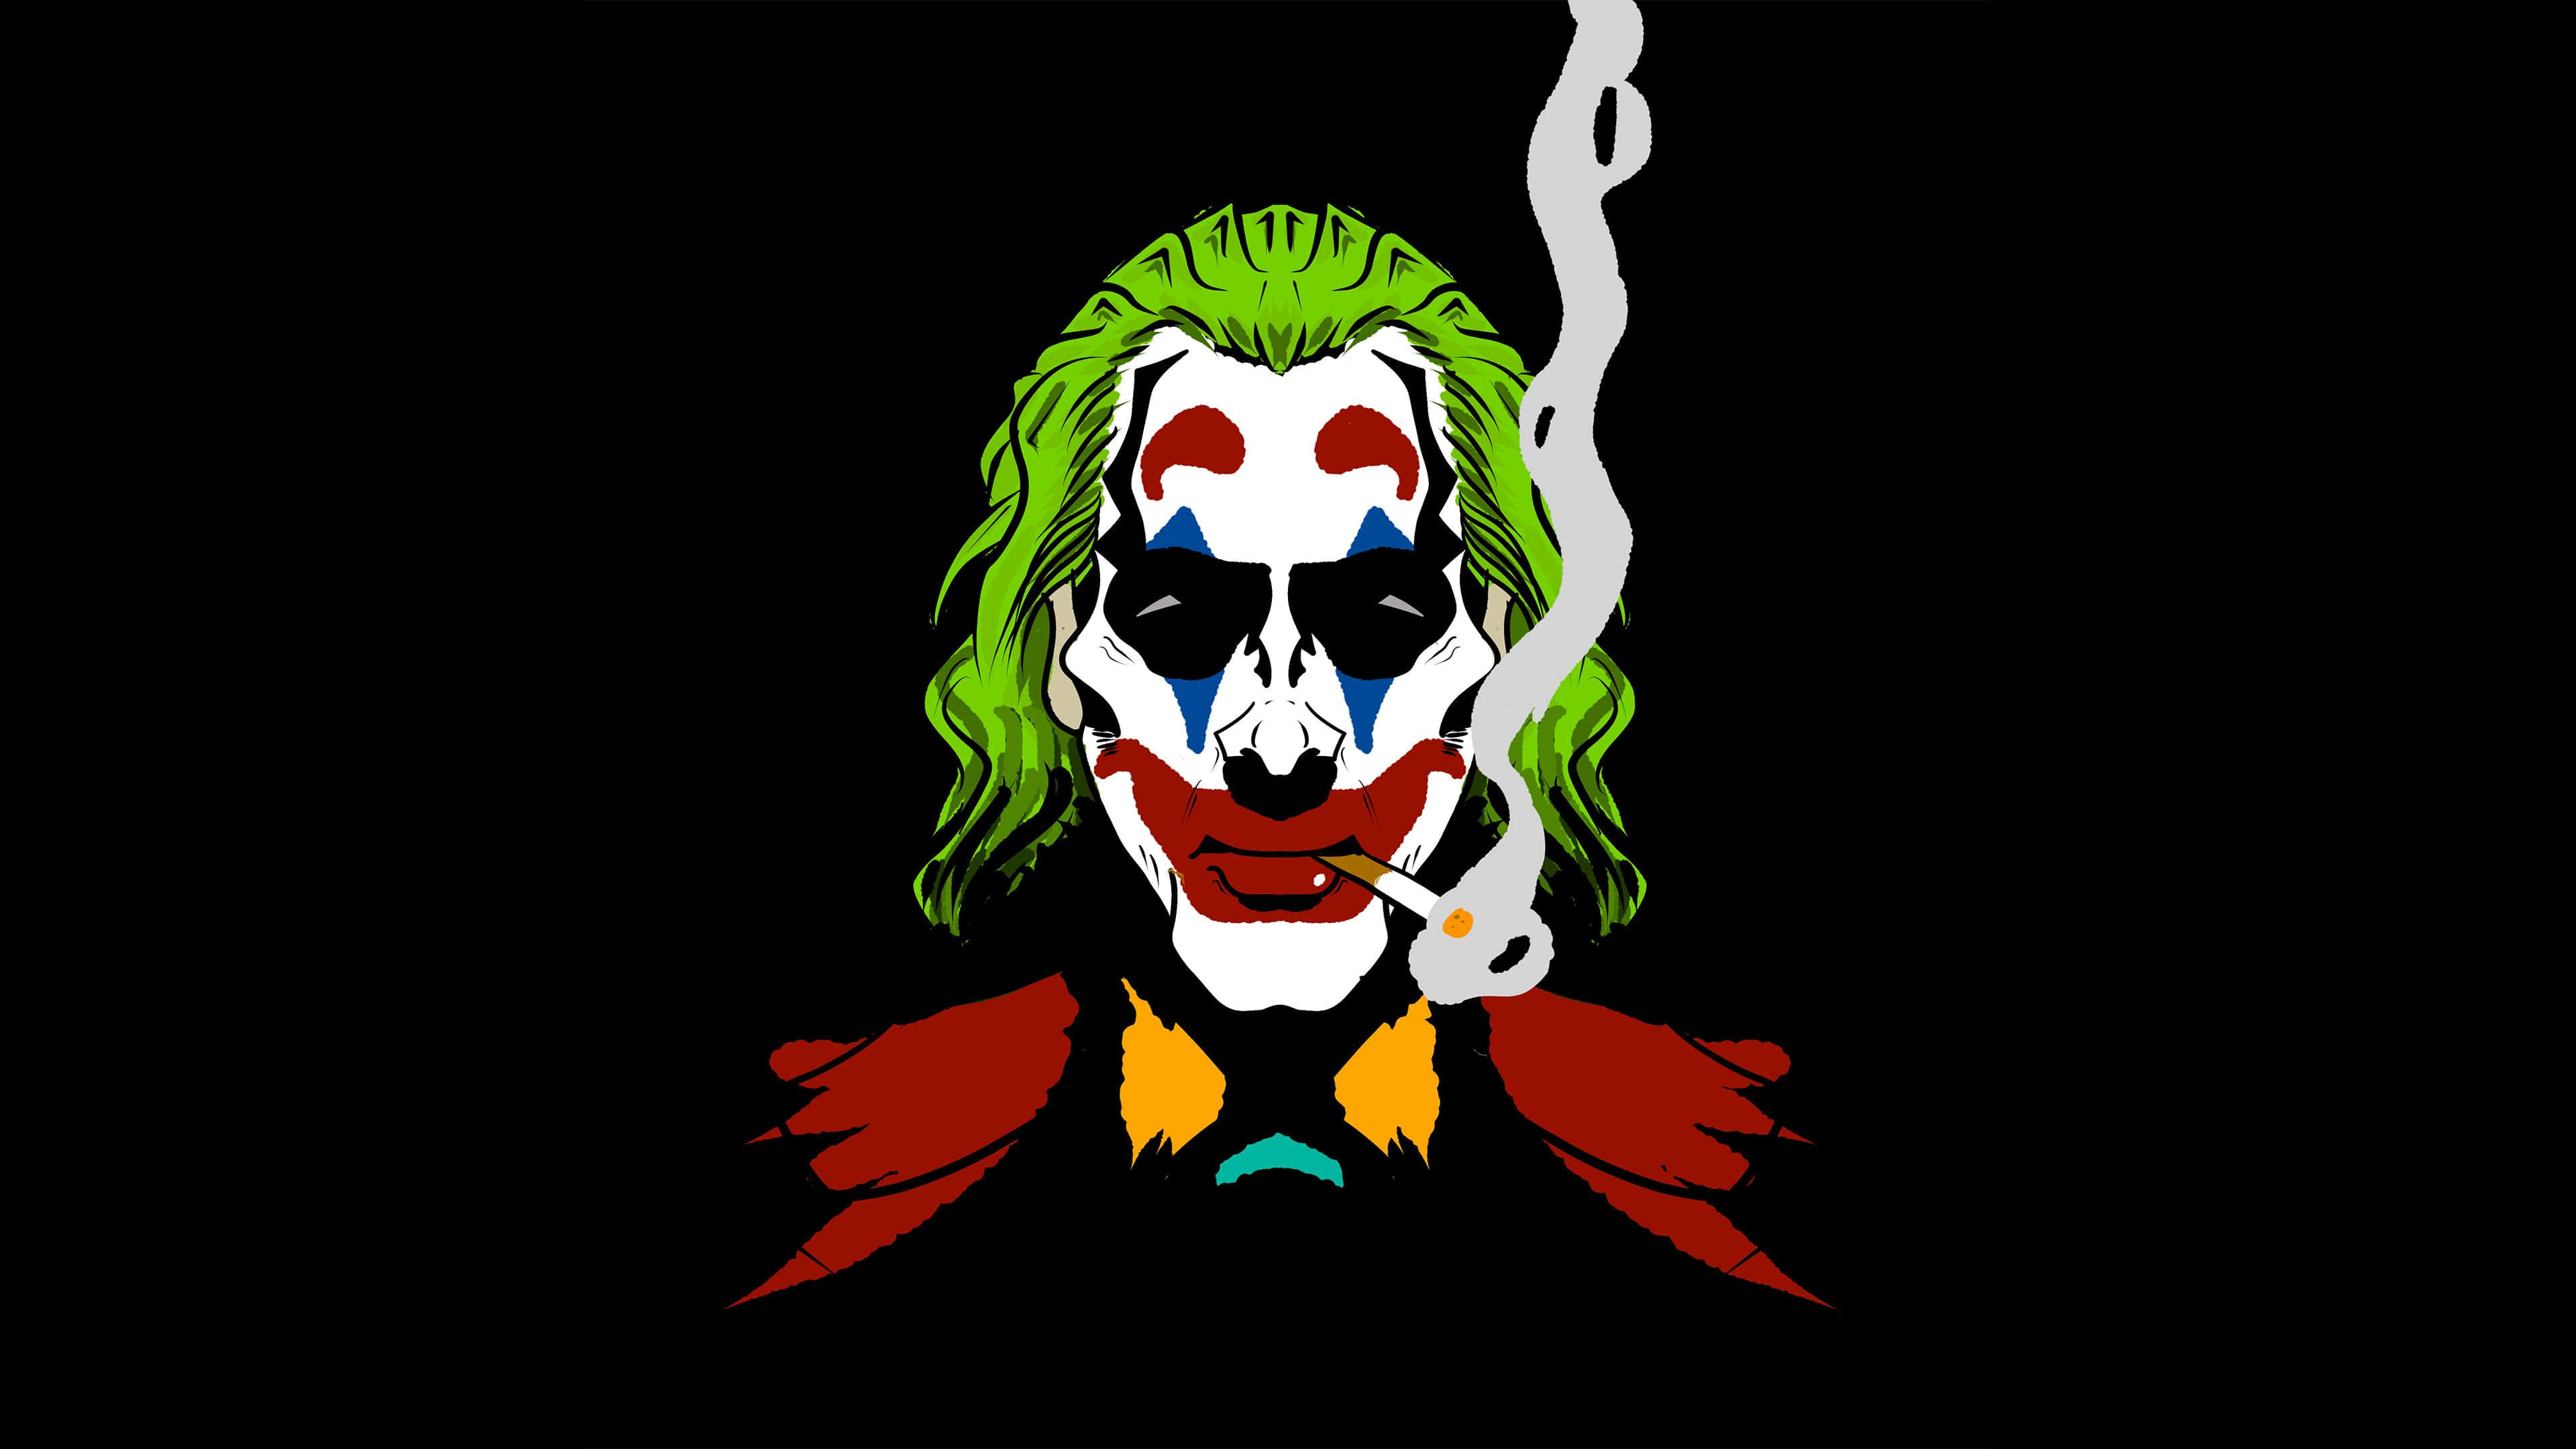 Download Joker Mask Pictures 3840 X 2160 | Wallpapers.com